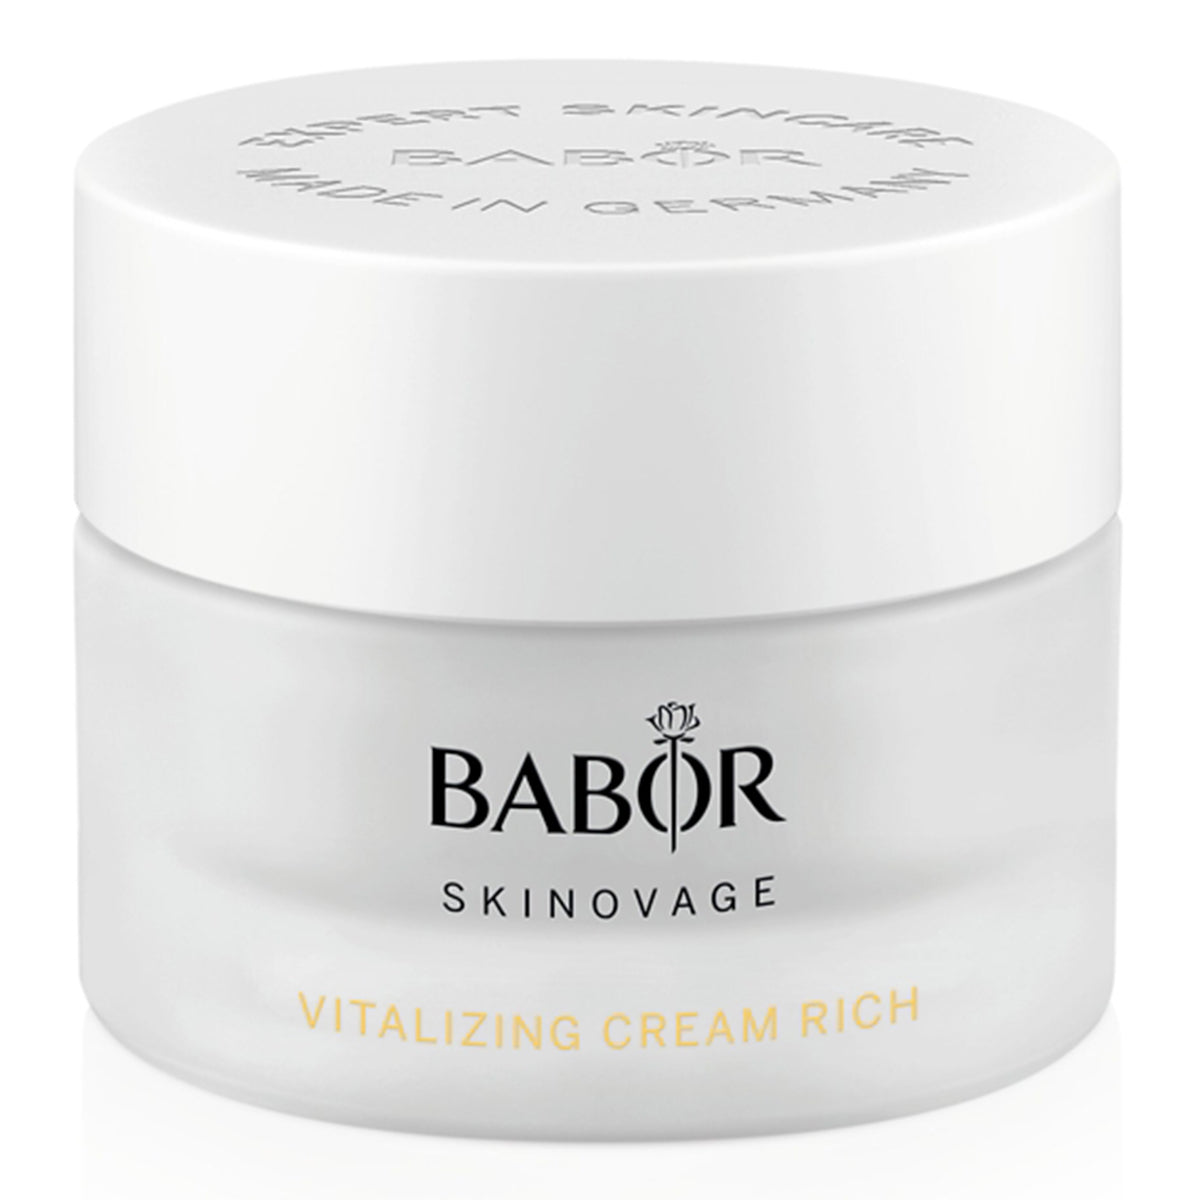 Skinovage Vitalizing Cream Rich 50ml